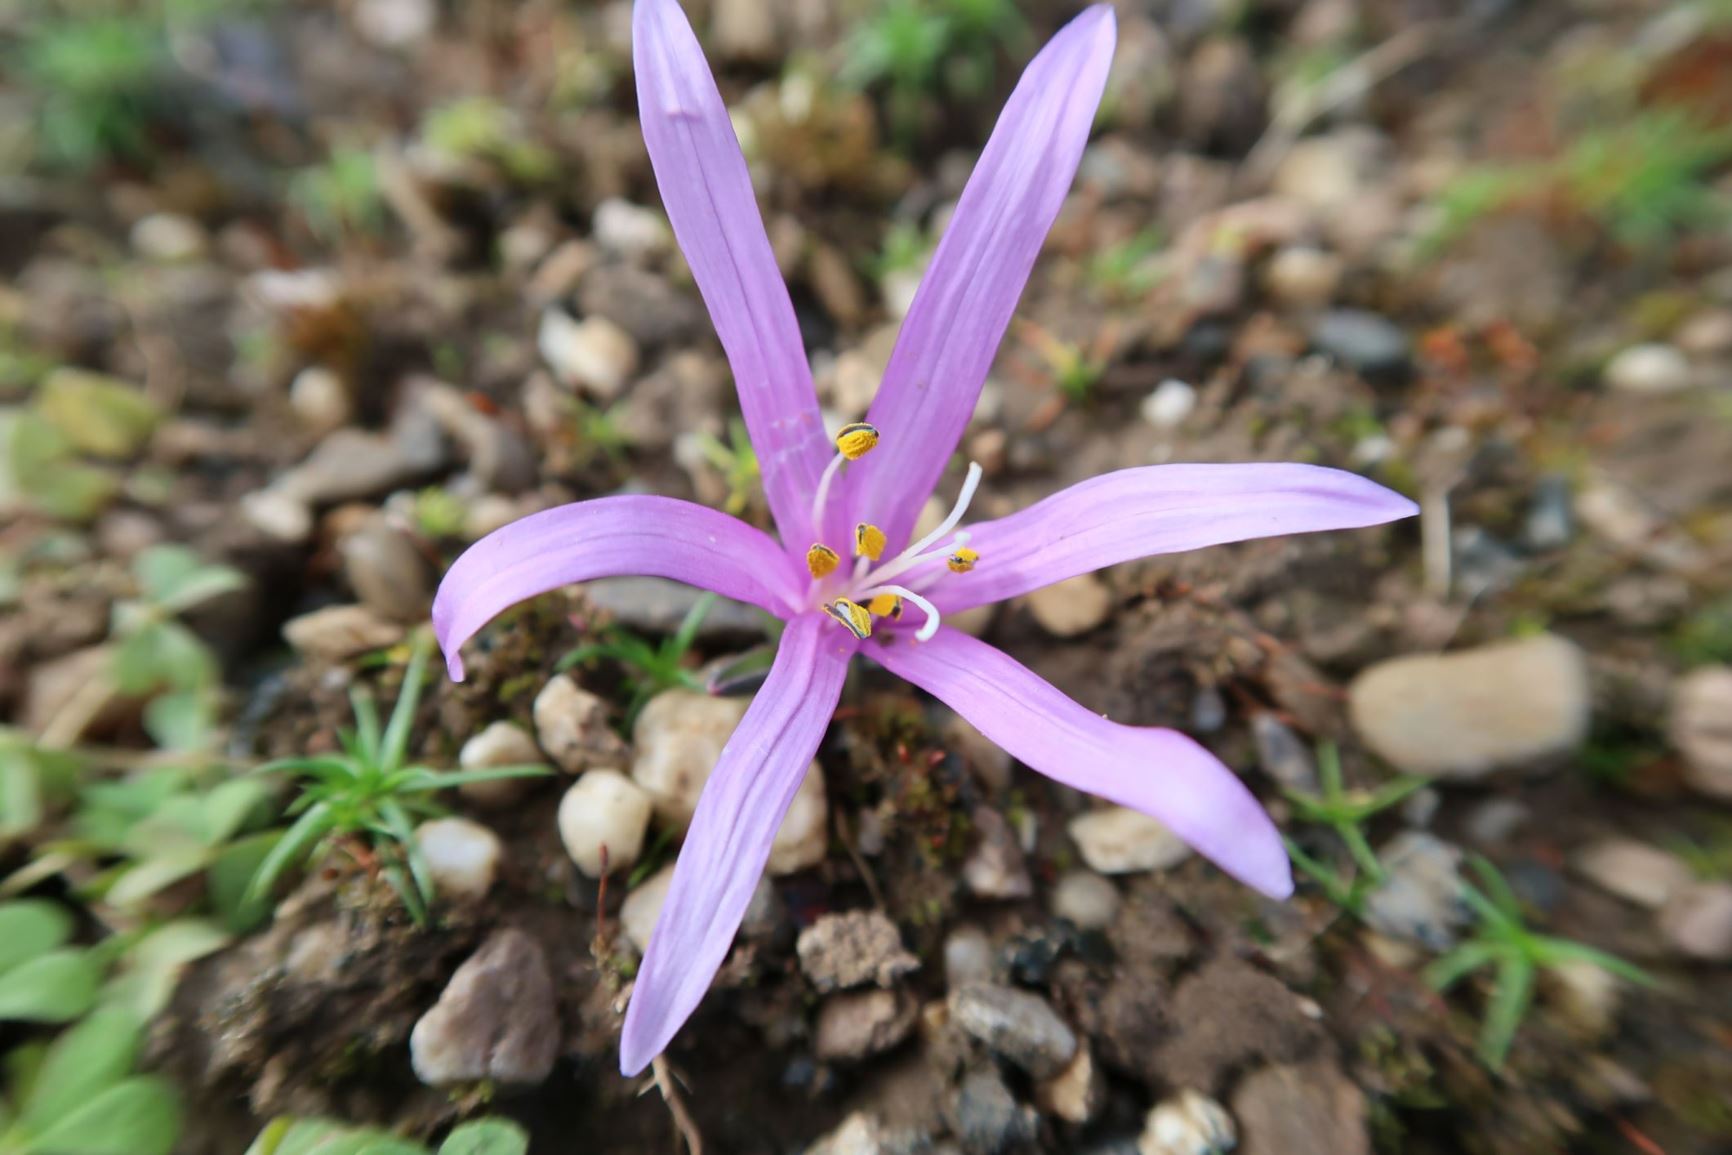 Colchicum bulbocodium - Frühlings-Lichtblume, spring meadow saffron